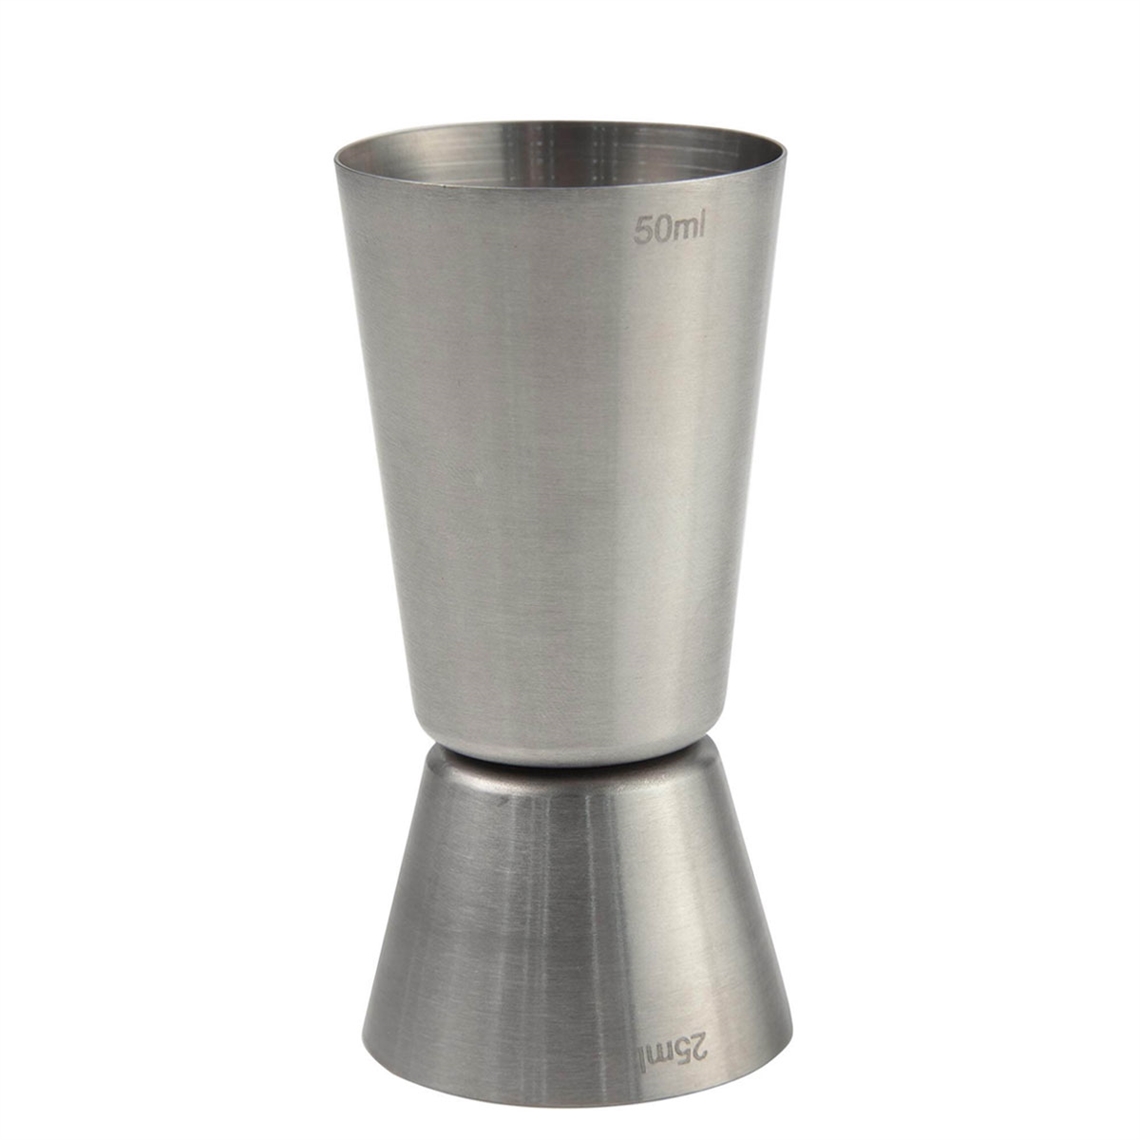 Professional Stainless Steel Bar Spirit Measure / Cocktail Jigger - 25ml/50ml